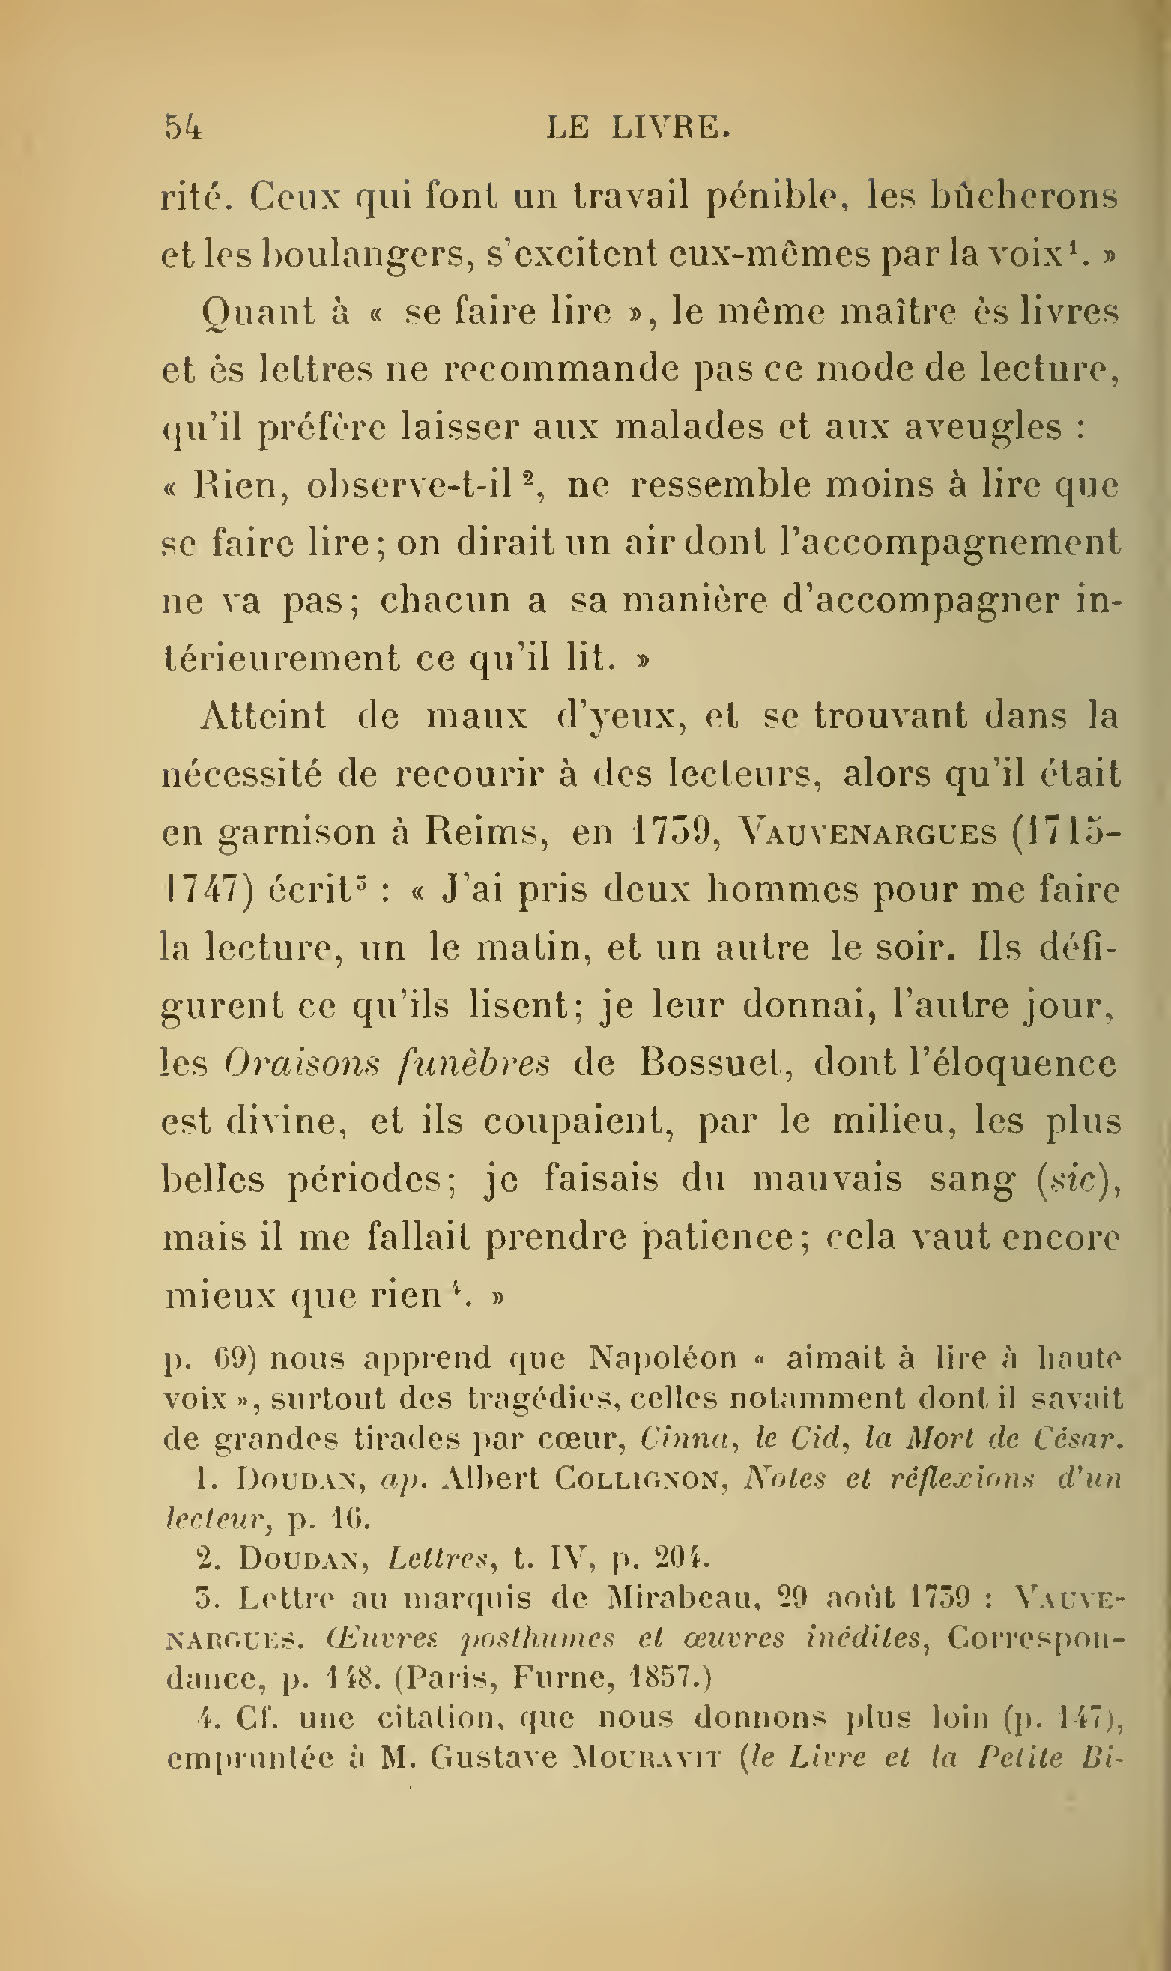 Albert Cim, Le Livre, t. II, p. 054.